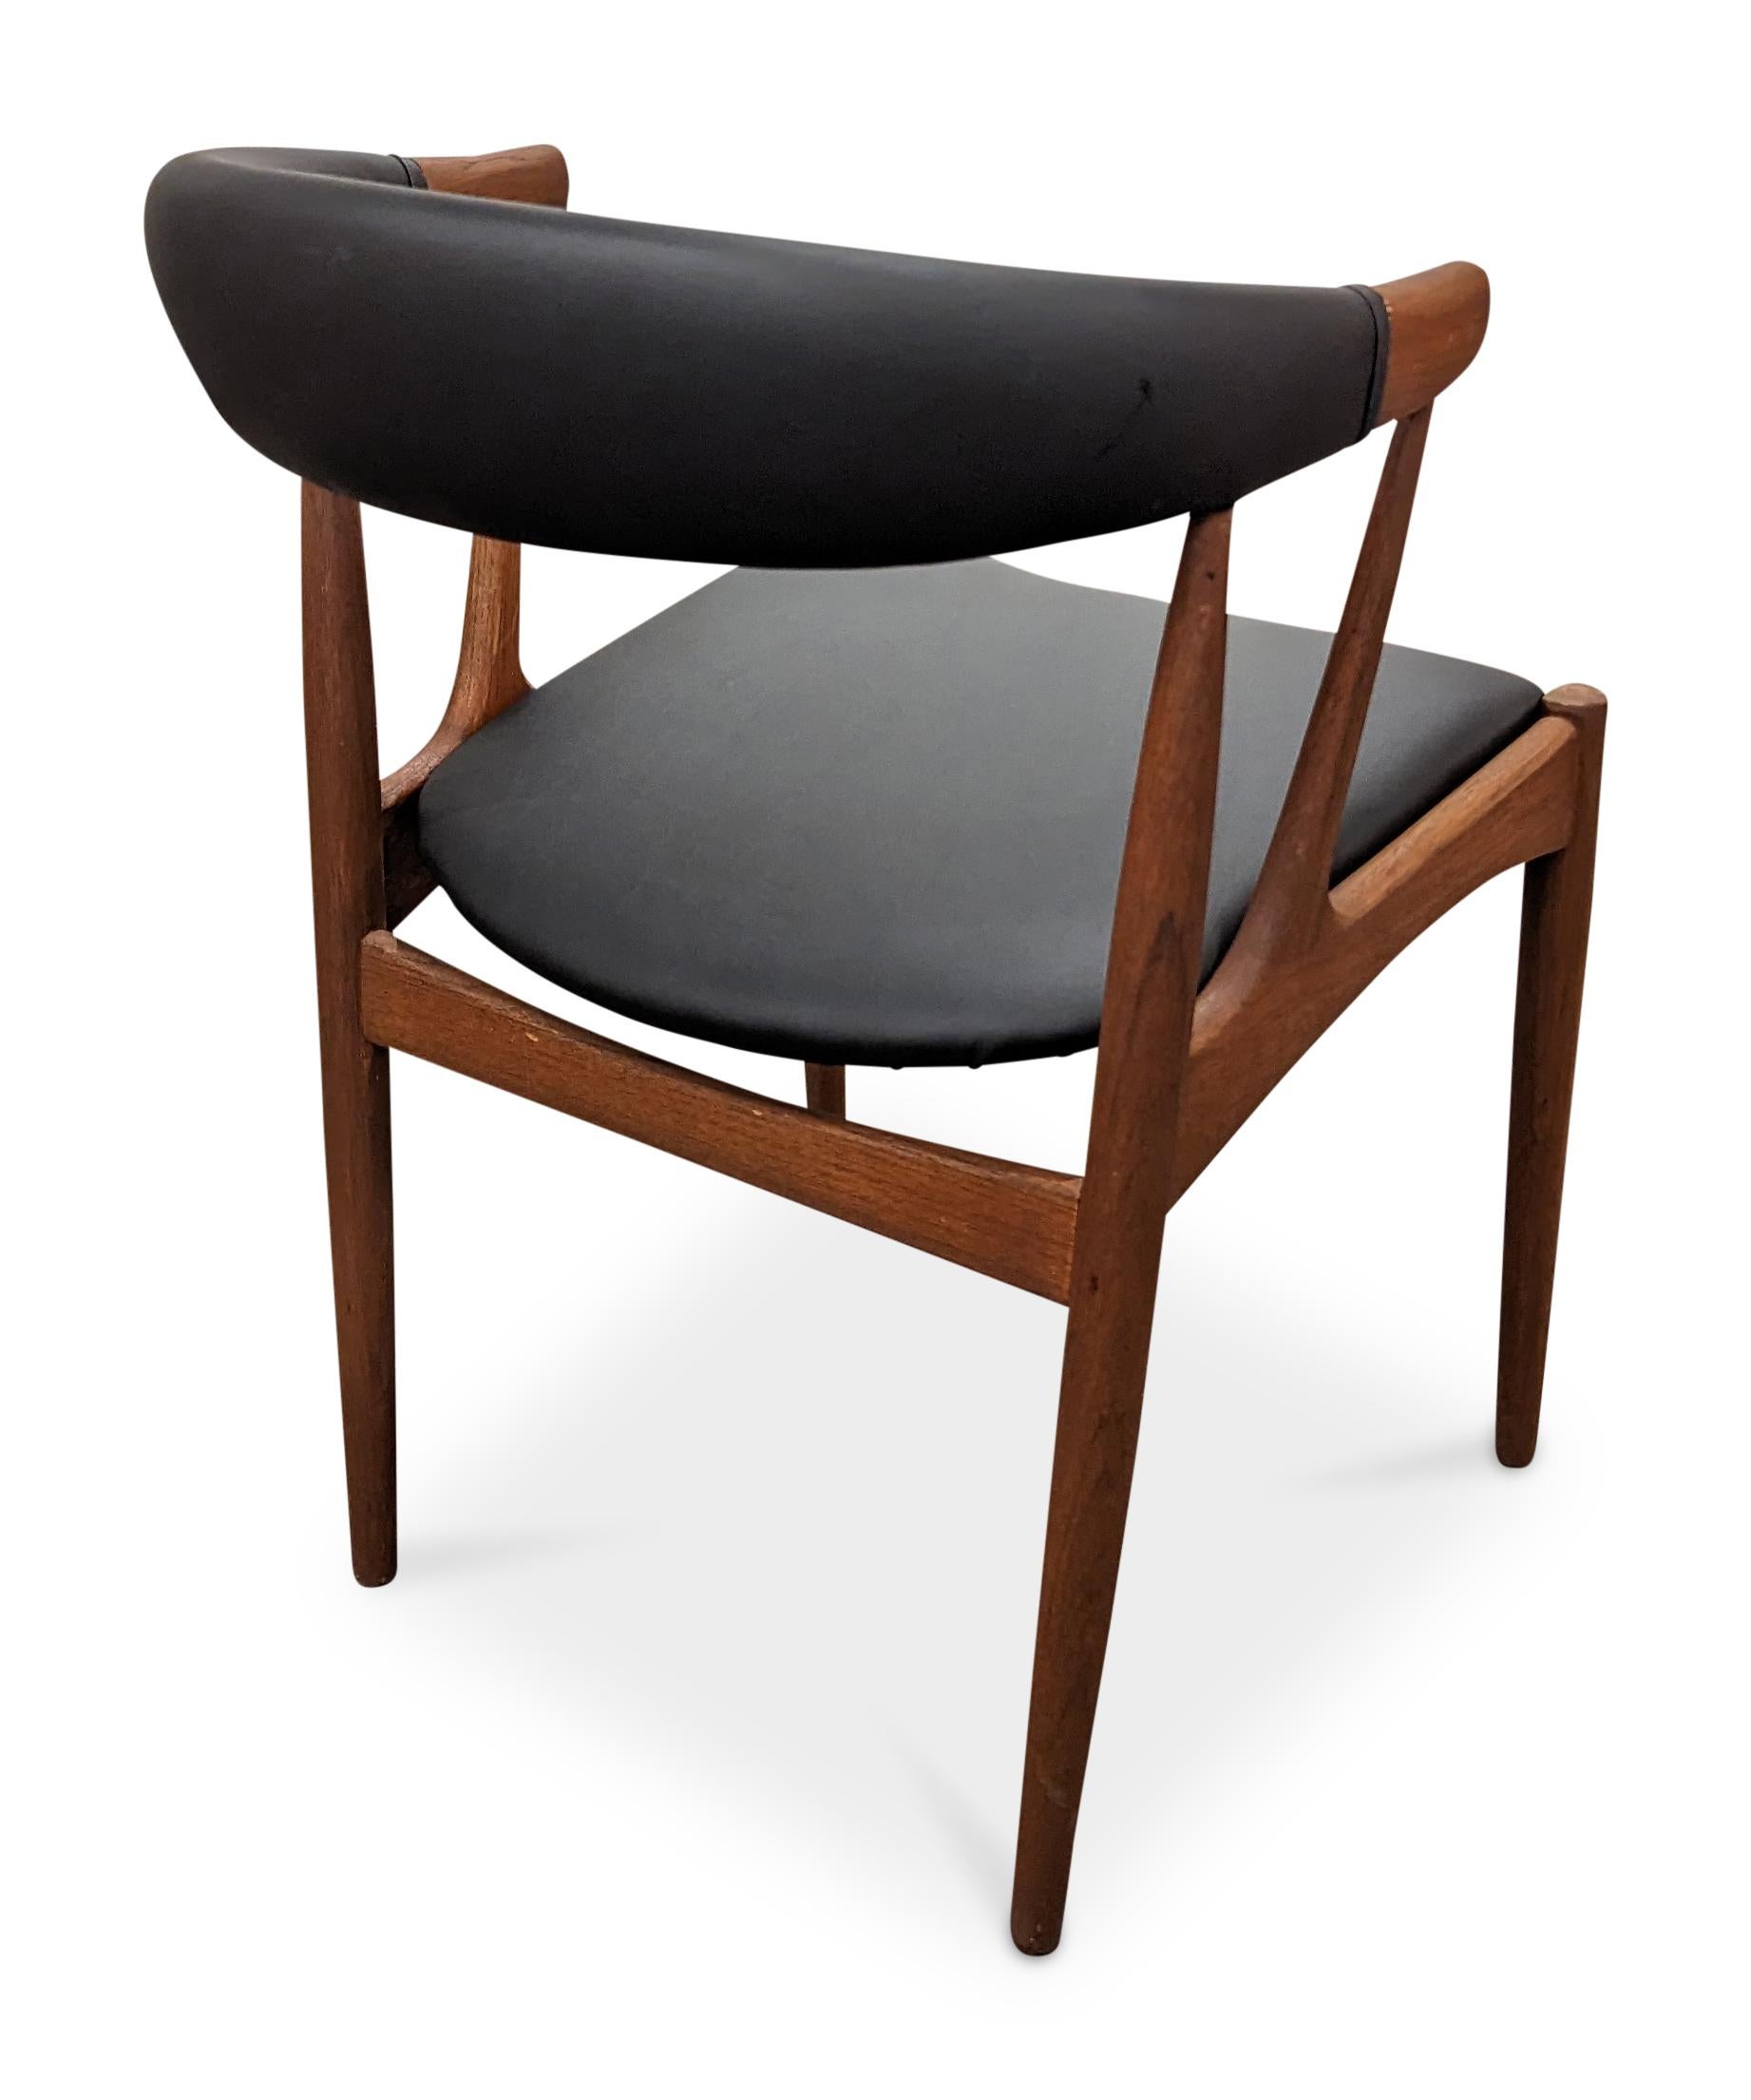 Mid-20th Century Vintage Danish Mid Century Johannes Andersen Arm Chair - 022432 For Sale